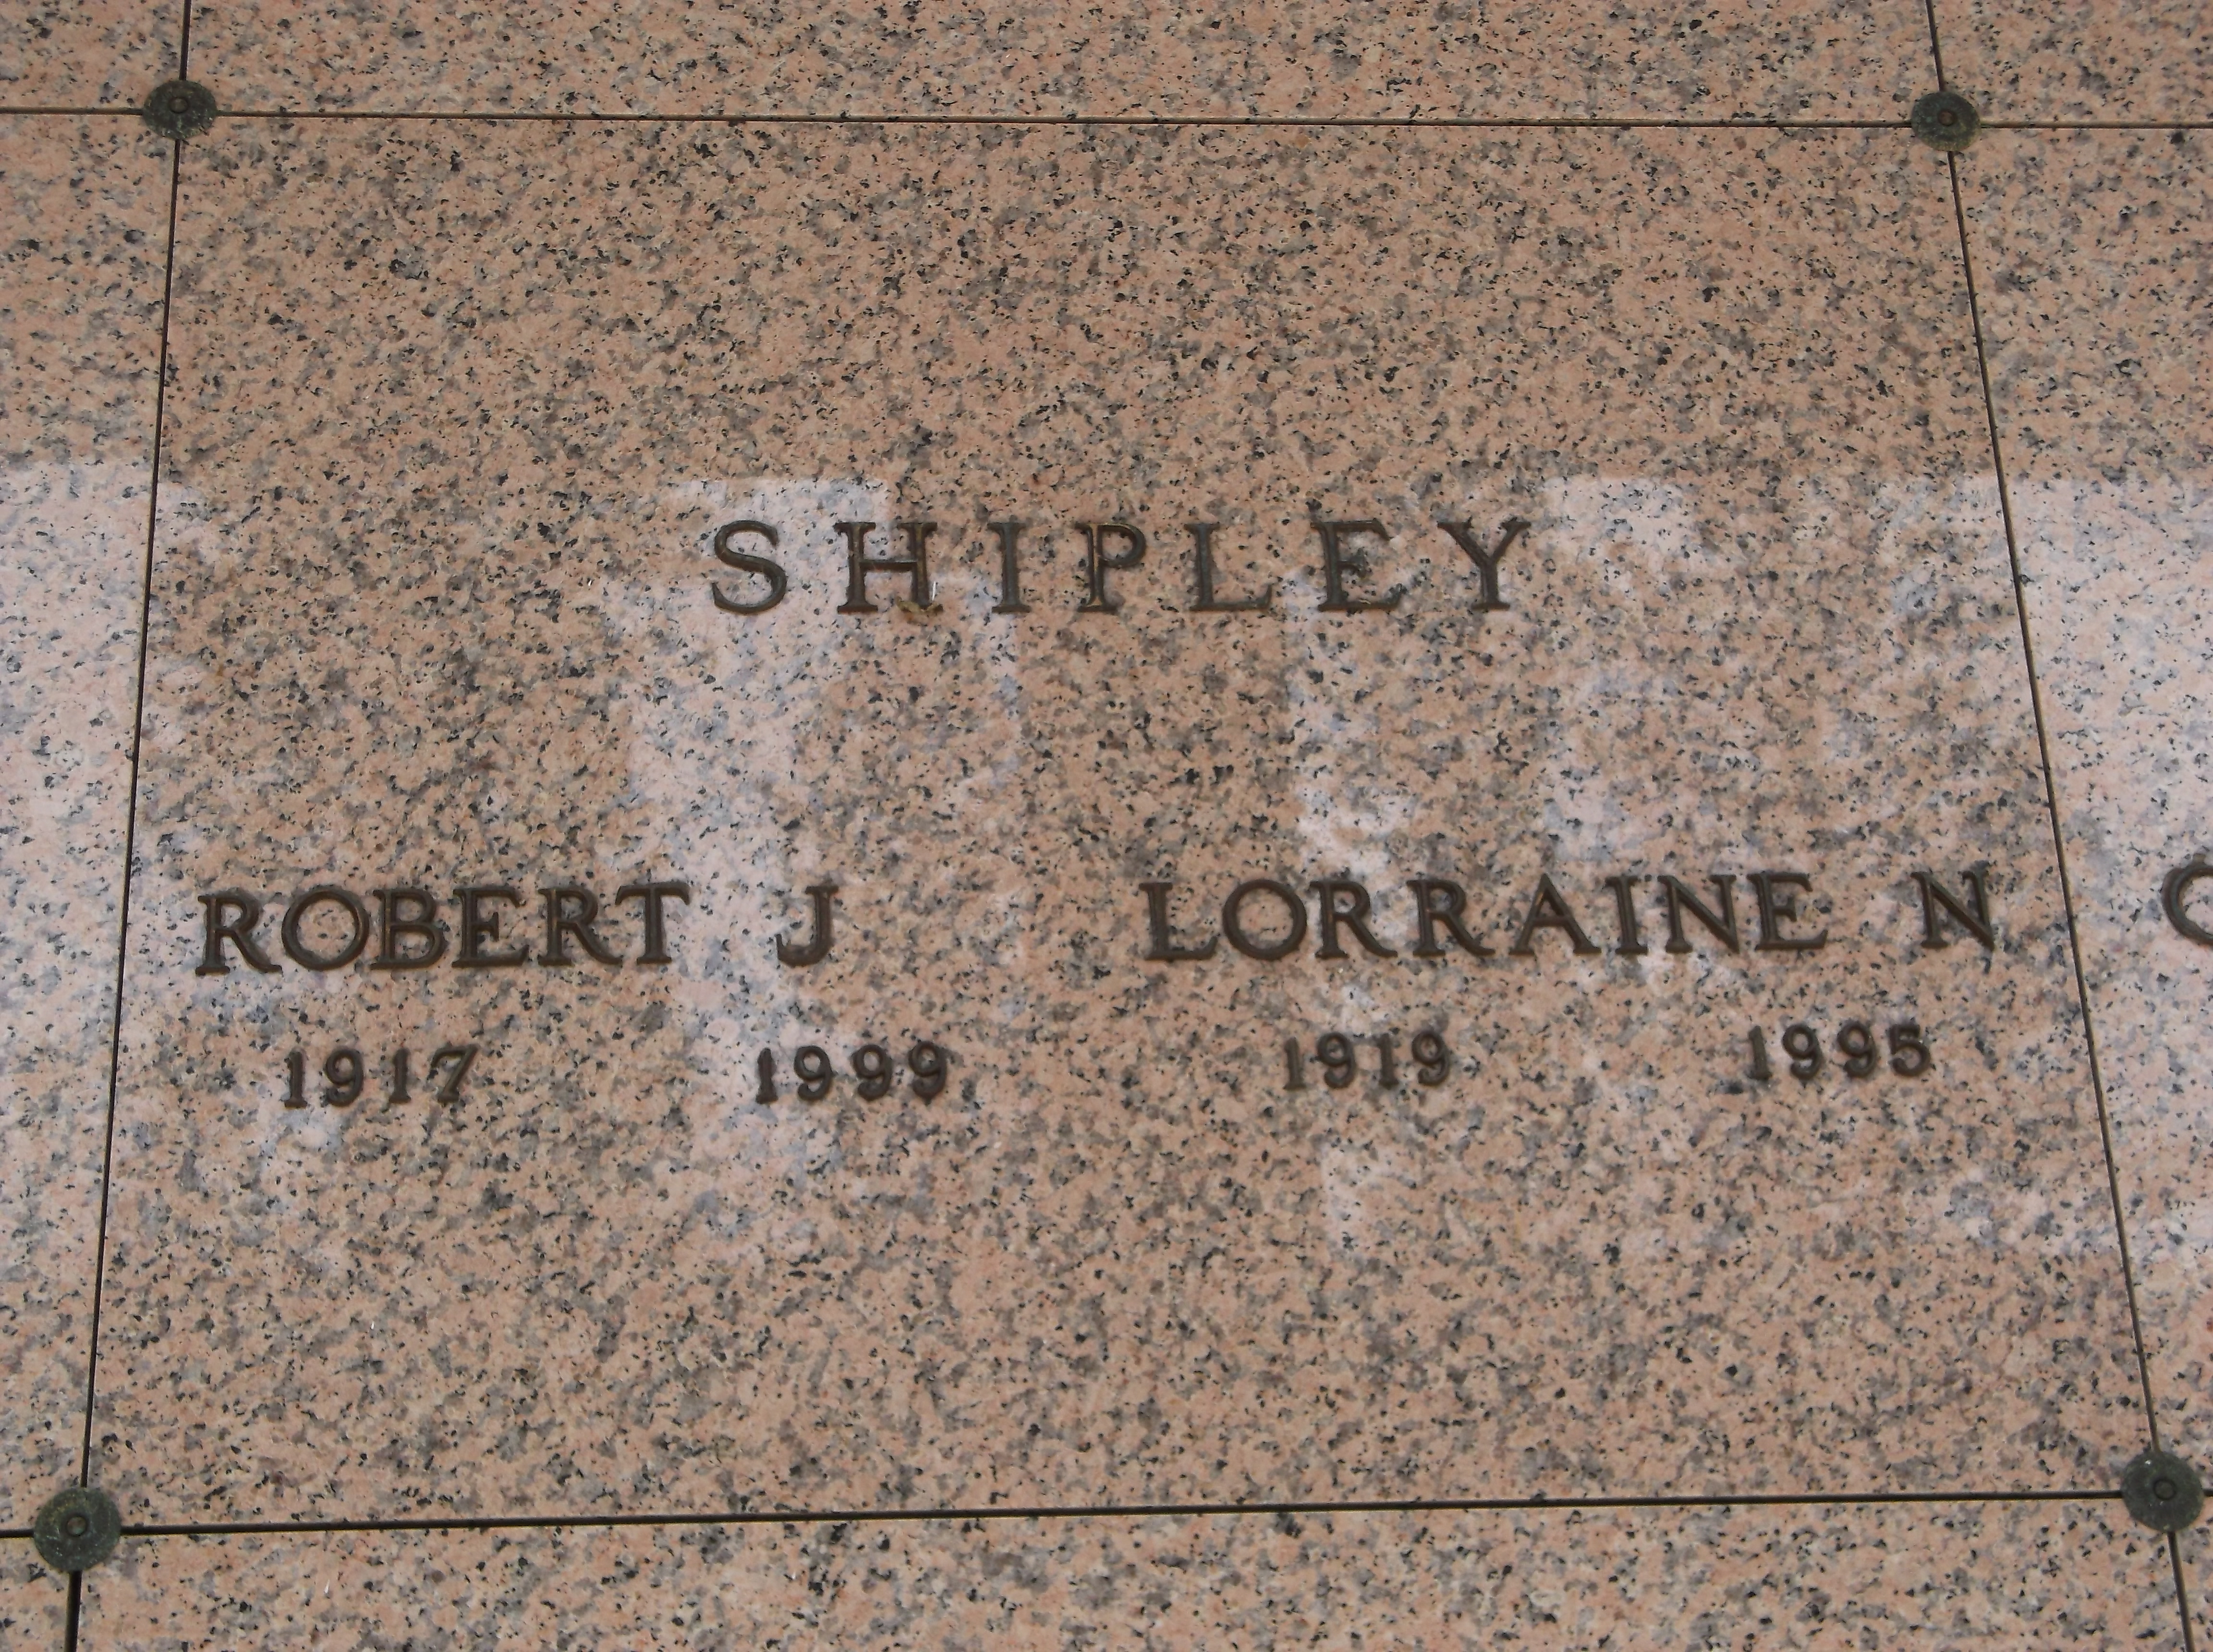 Lorraine N Shipley